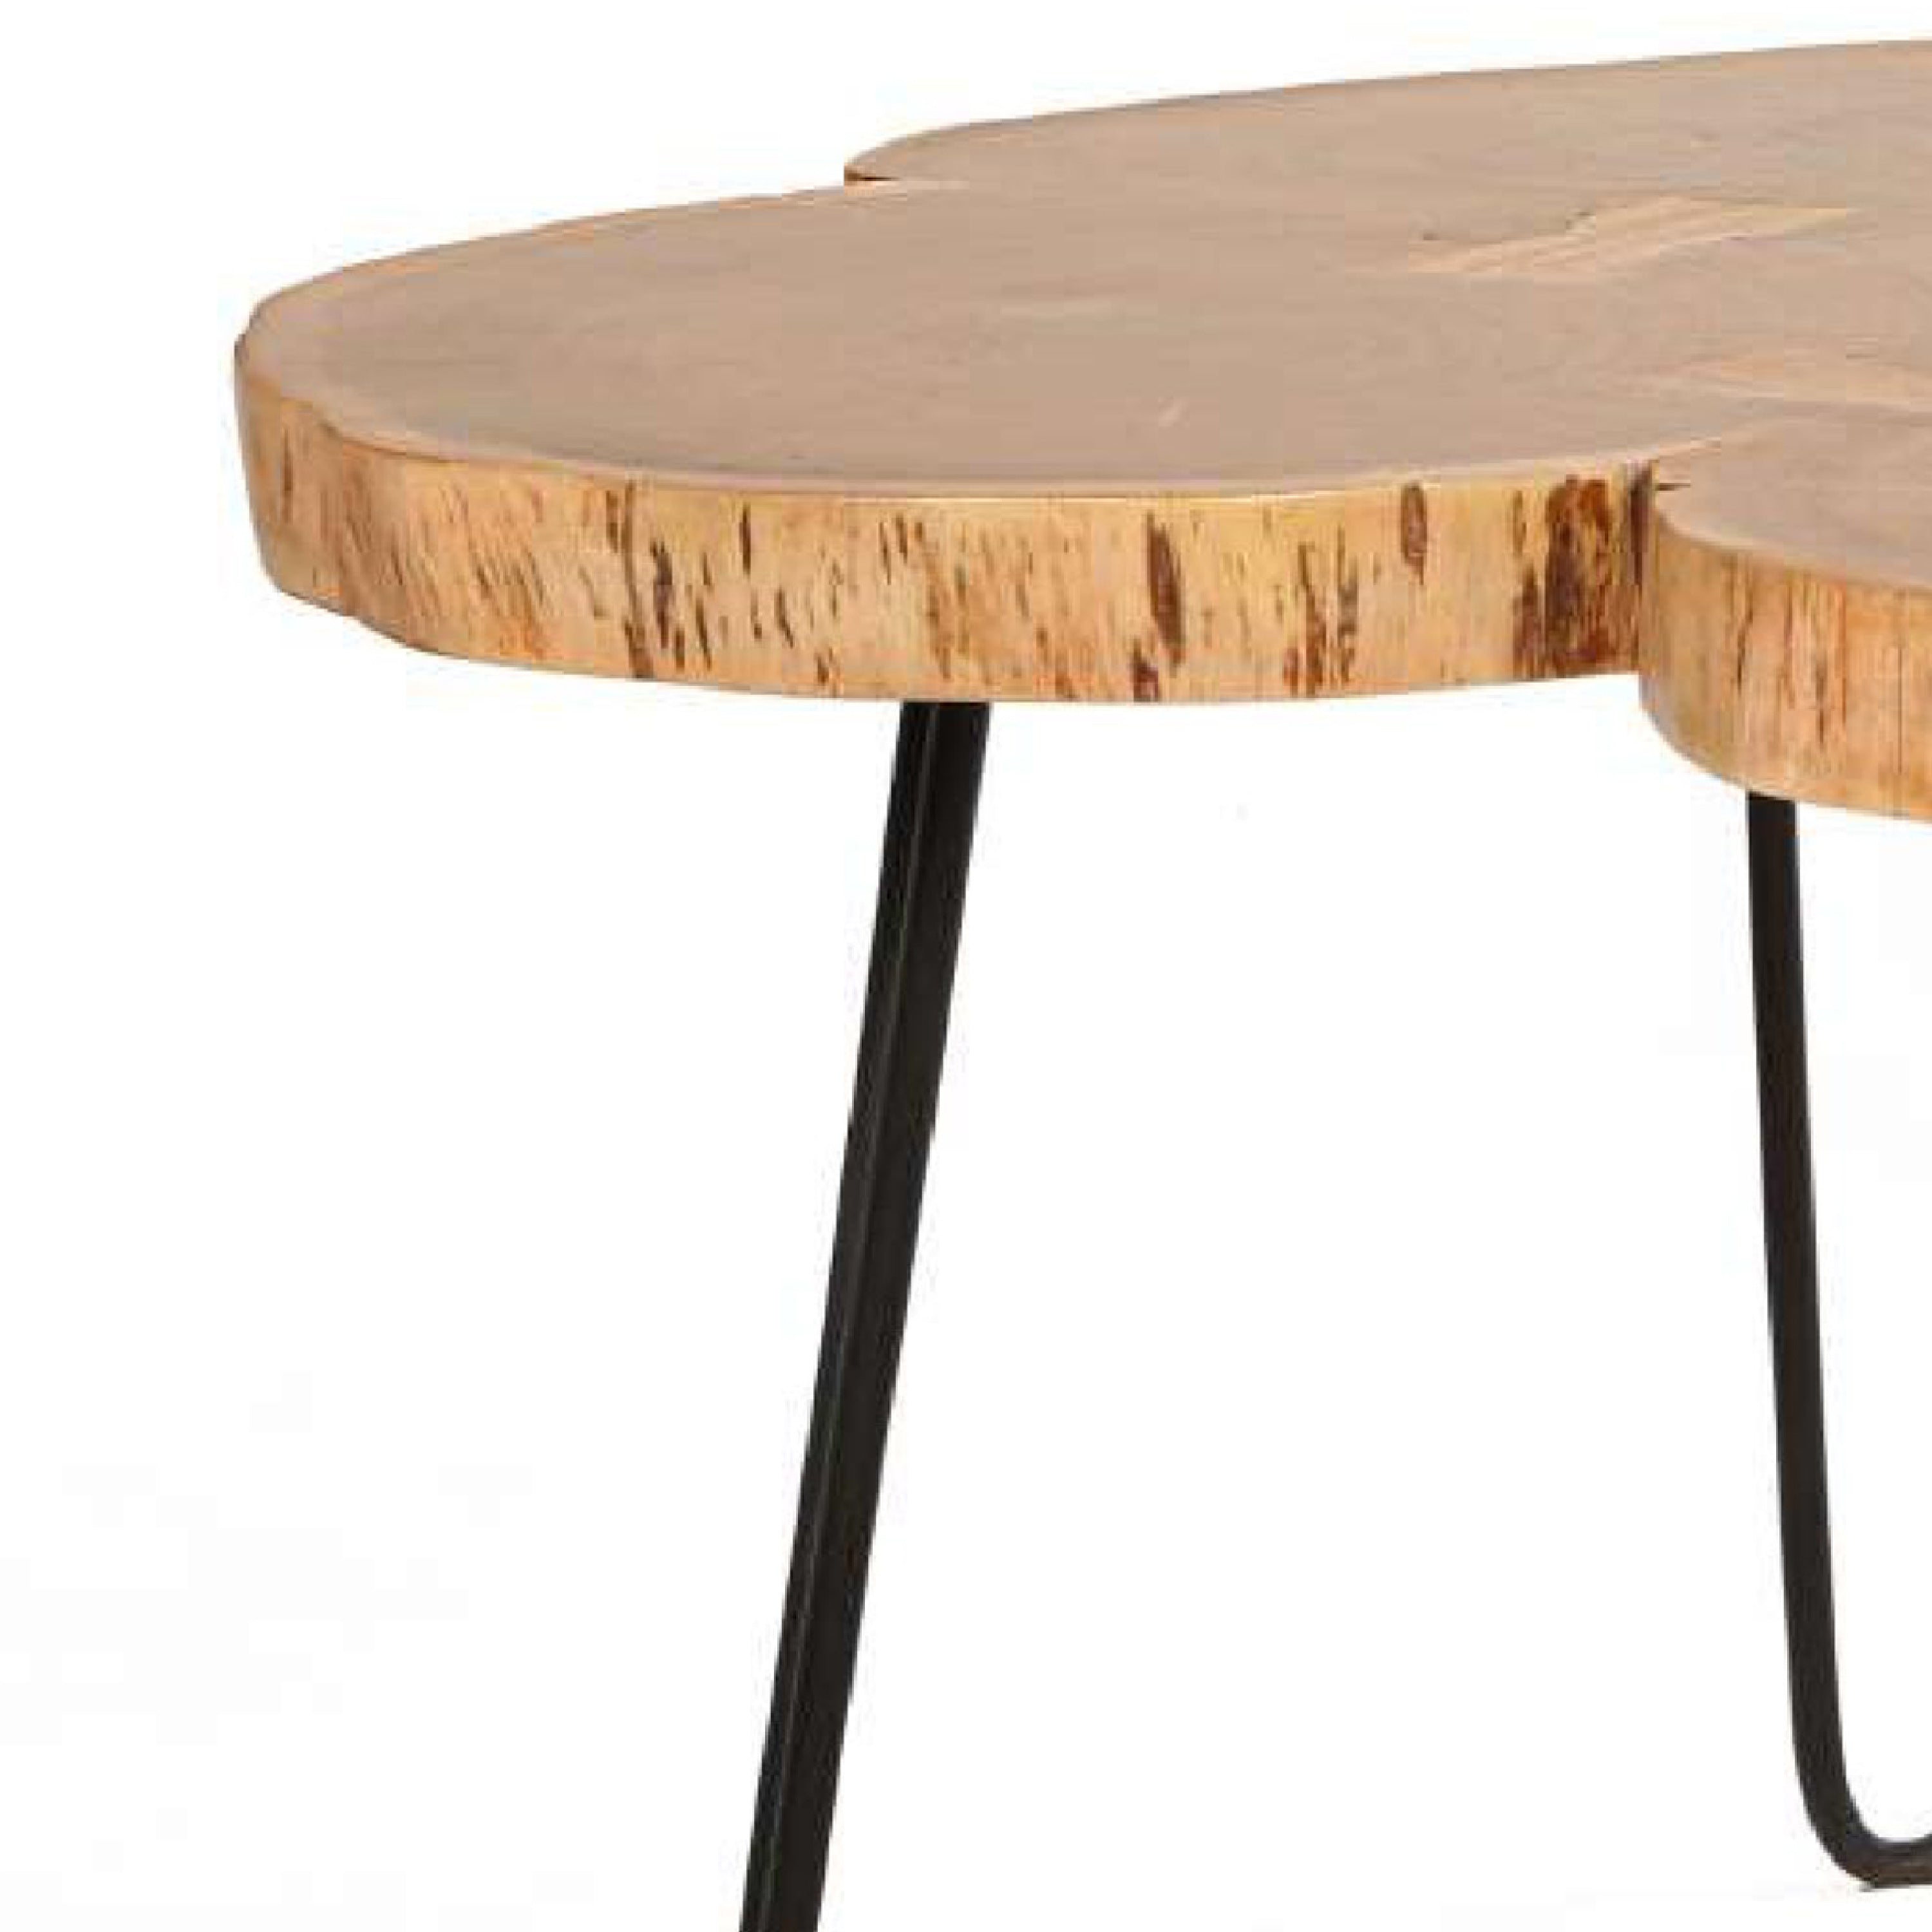 29 Inch Acacia Wood Coffee Table, Live Edge, Quatrefoil Top, Iron Hairpin Legs - Brown and Black